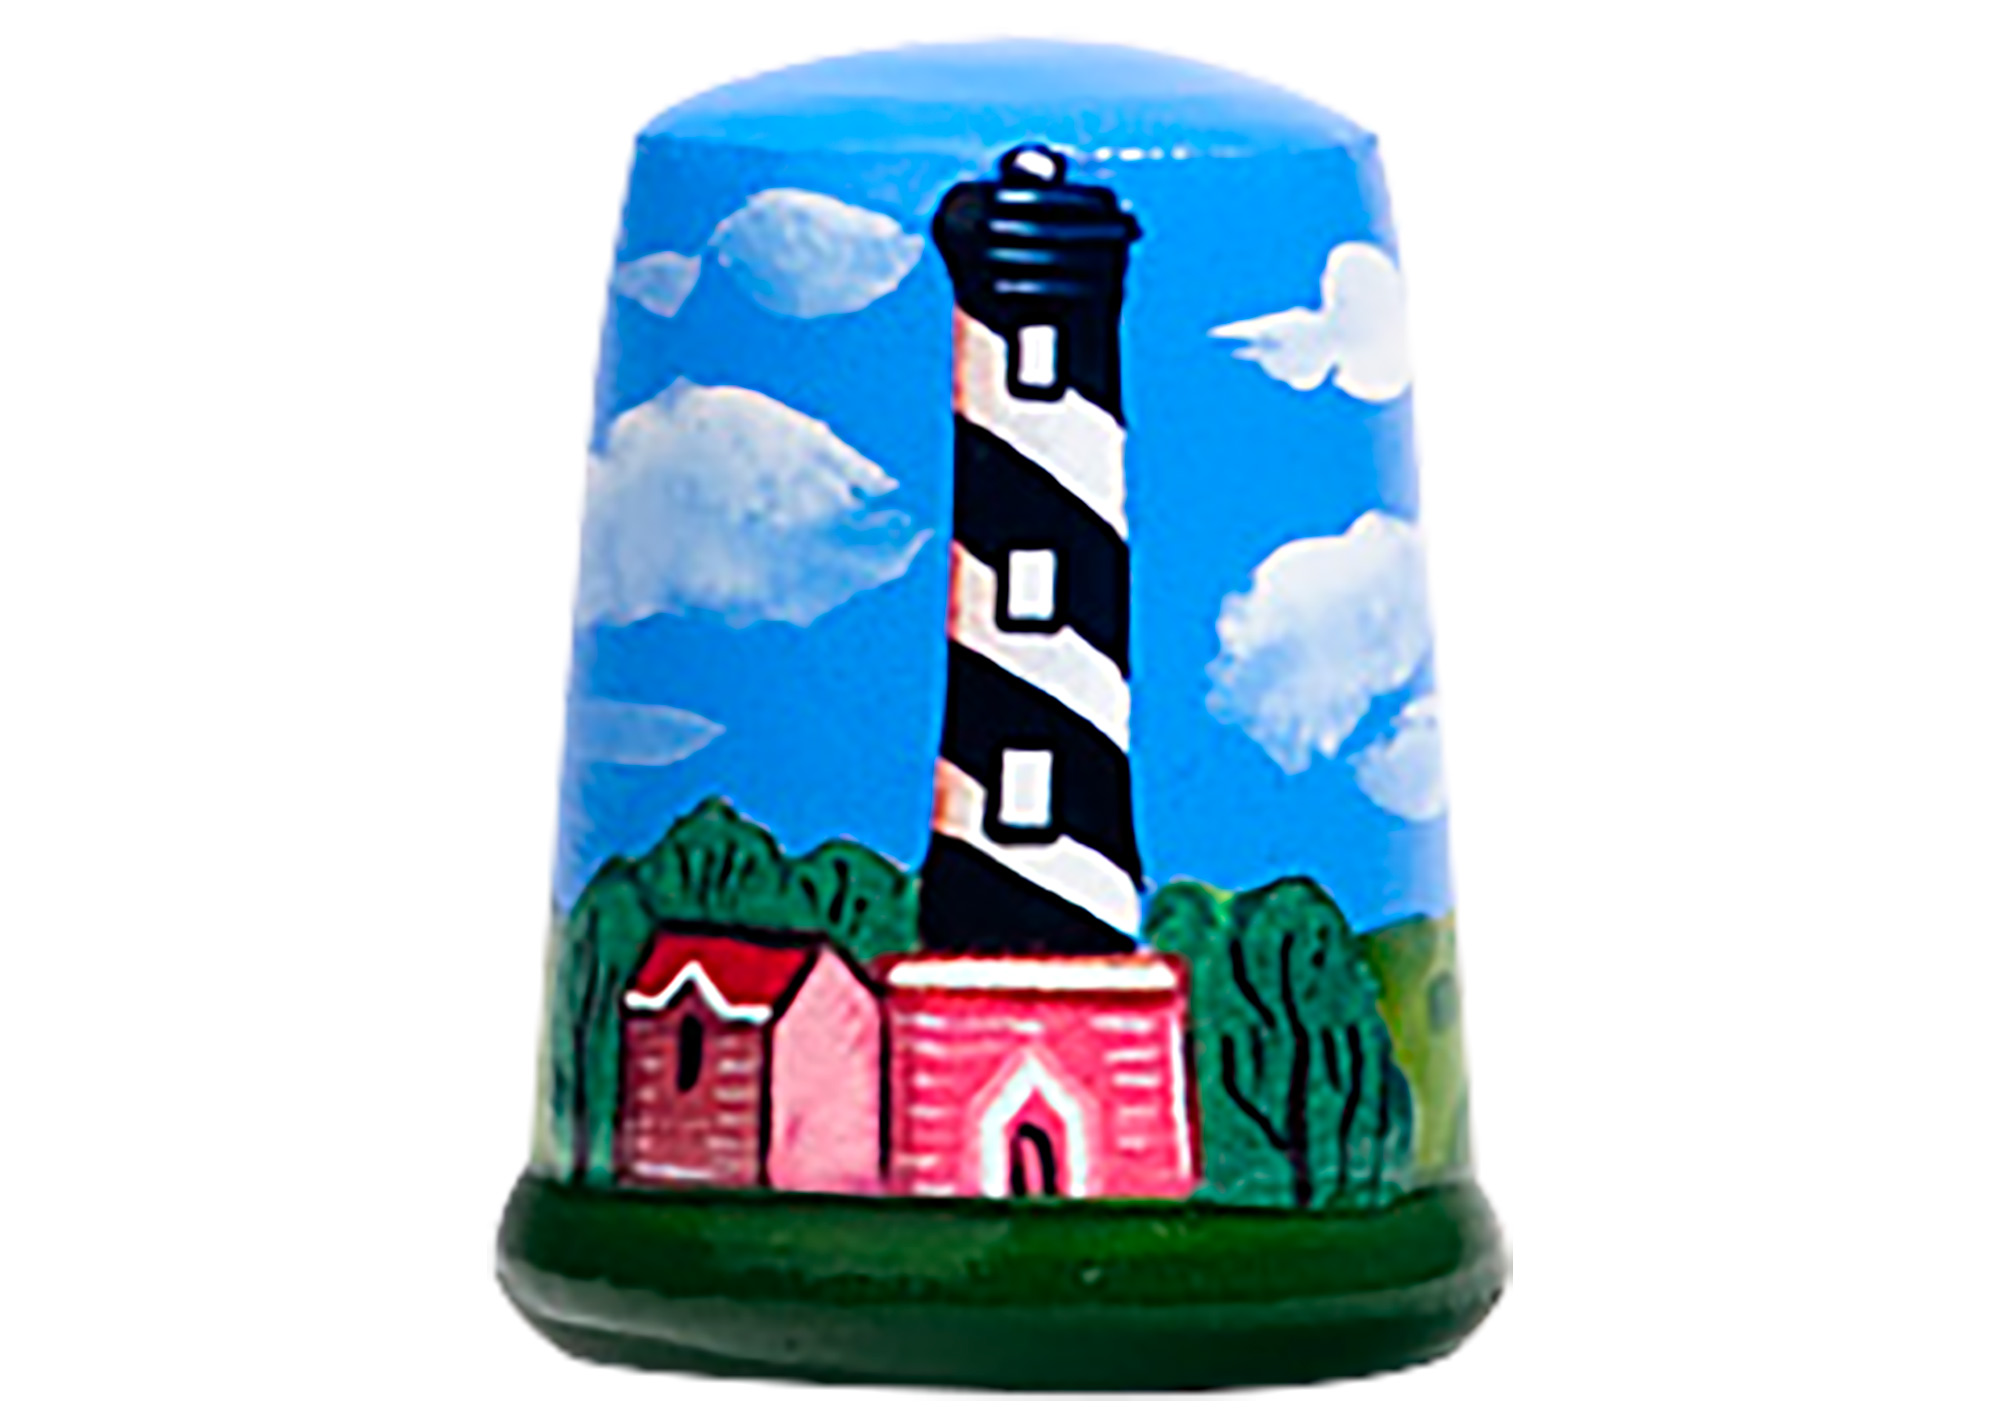 Buy Hatteras Lighthouse Thimble, Wood 1" at GoldenCockerel.com